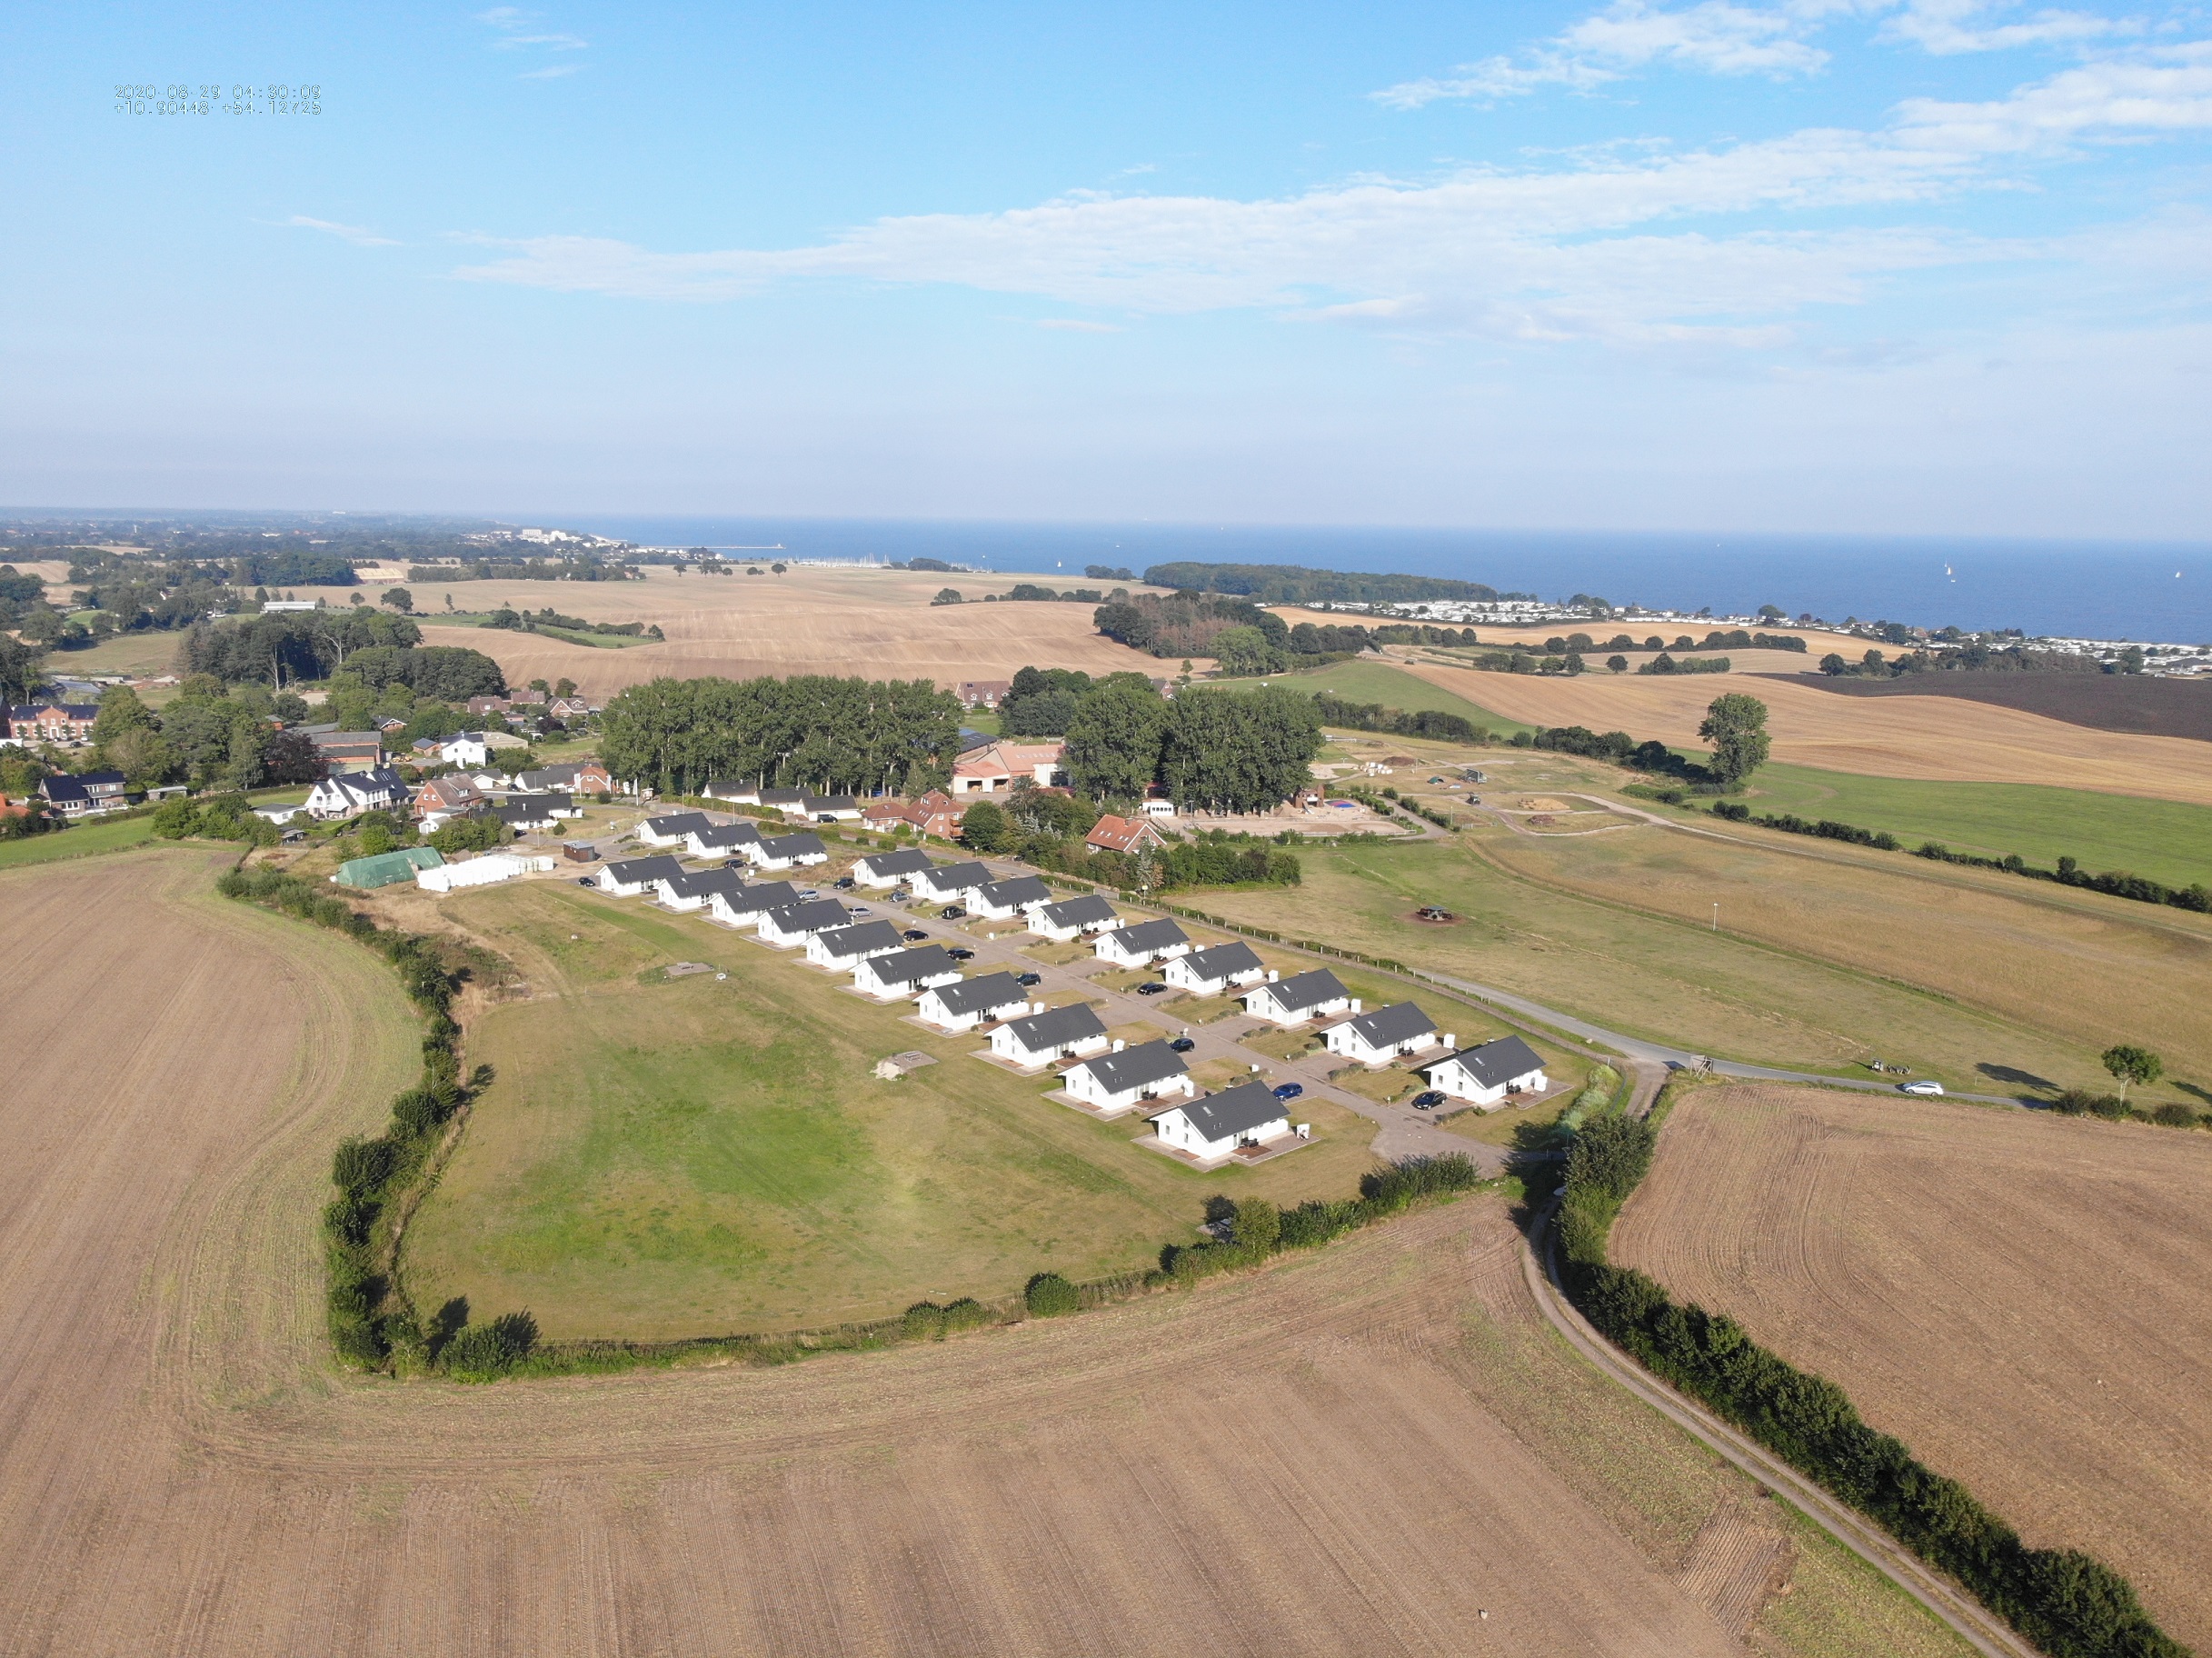 aerial-overview-Holiday-farm-Bendfeldt-29.08.20.jpg